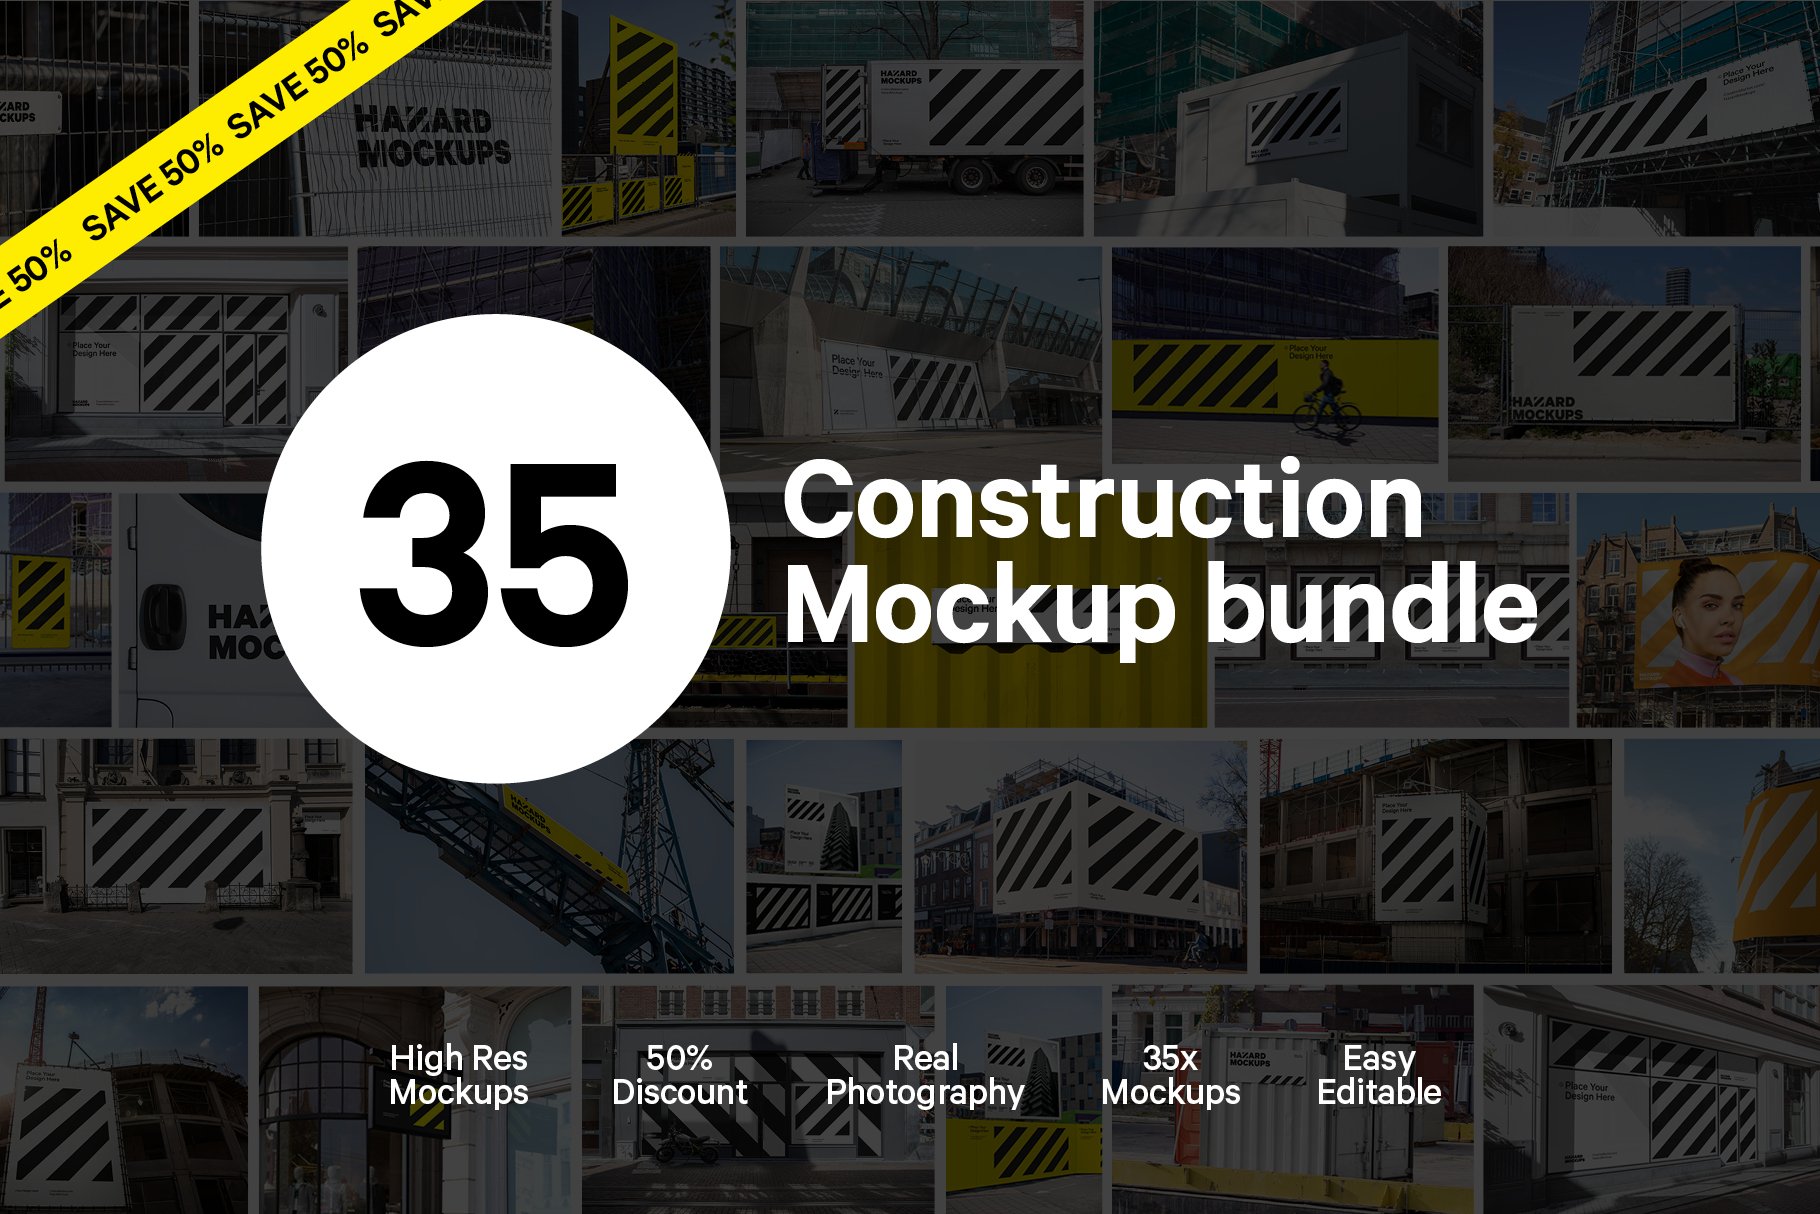 XL Construction Mockup Bundle cover image.